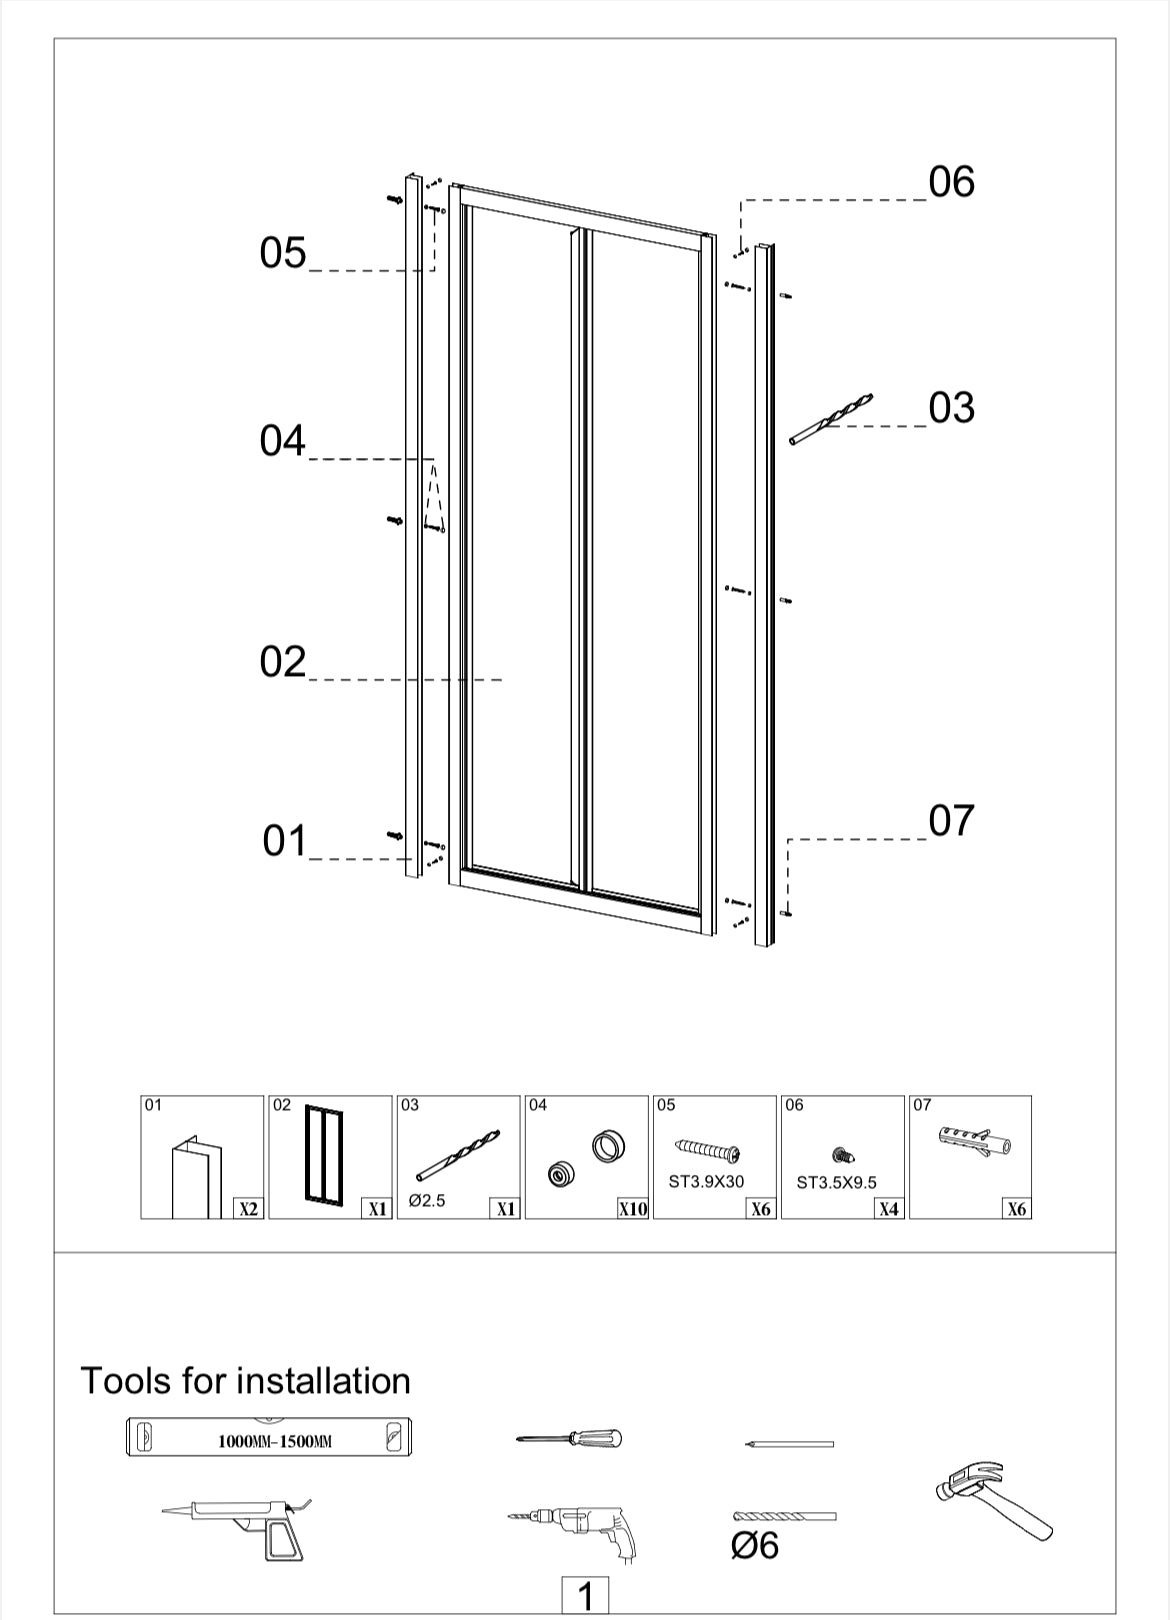 White FOLdoûr Bi Fold Accordion Aluminium Frame Frosted White Acrylic Shower Screen Door Designed for a Campervan